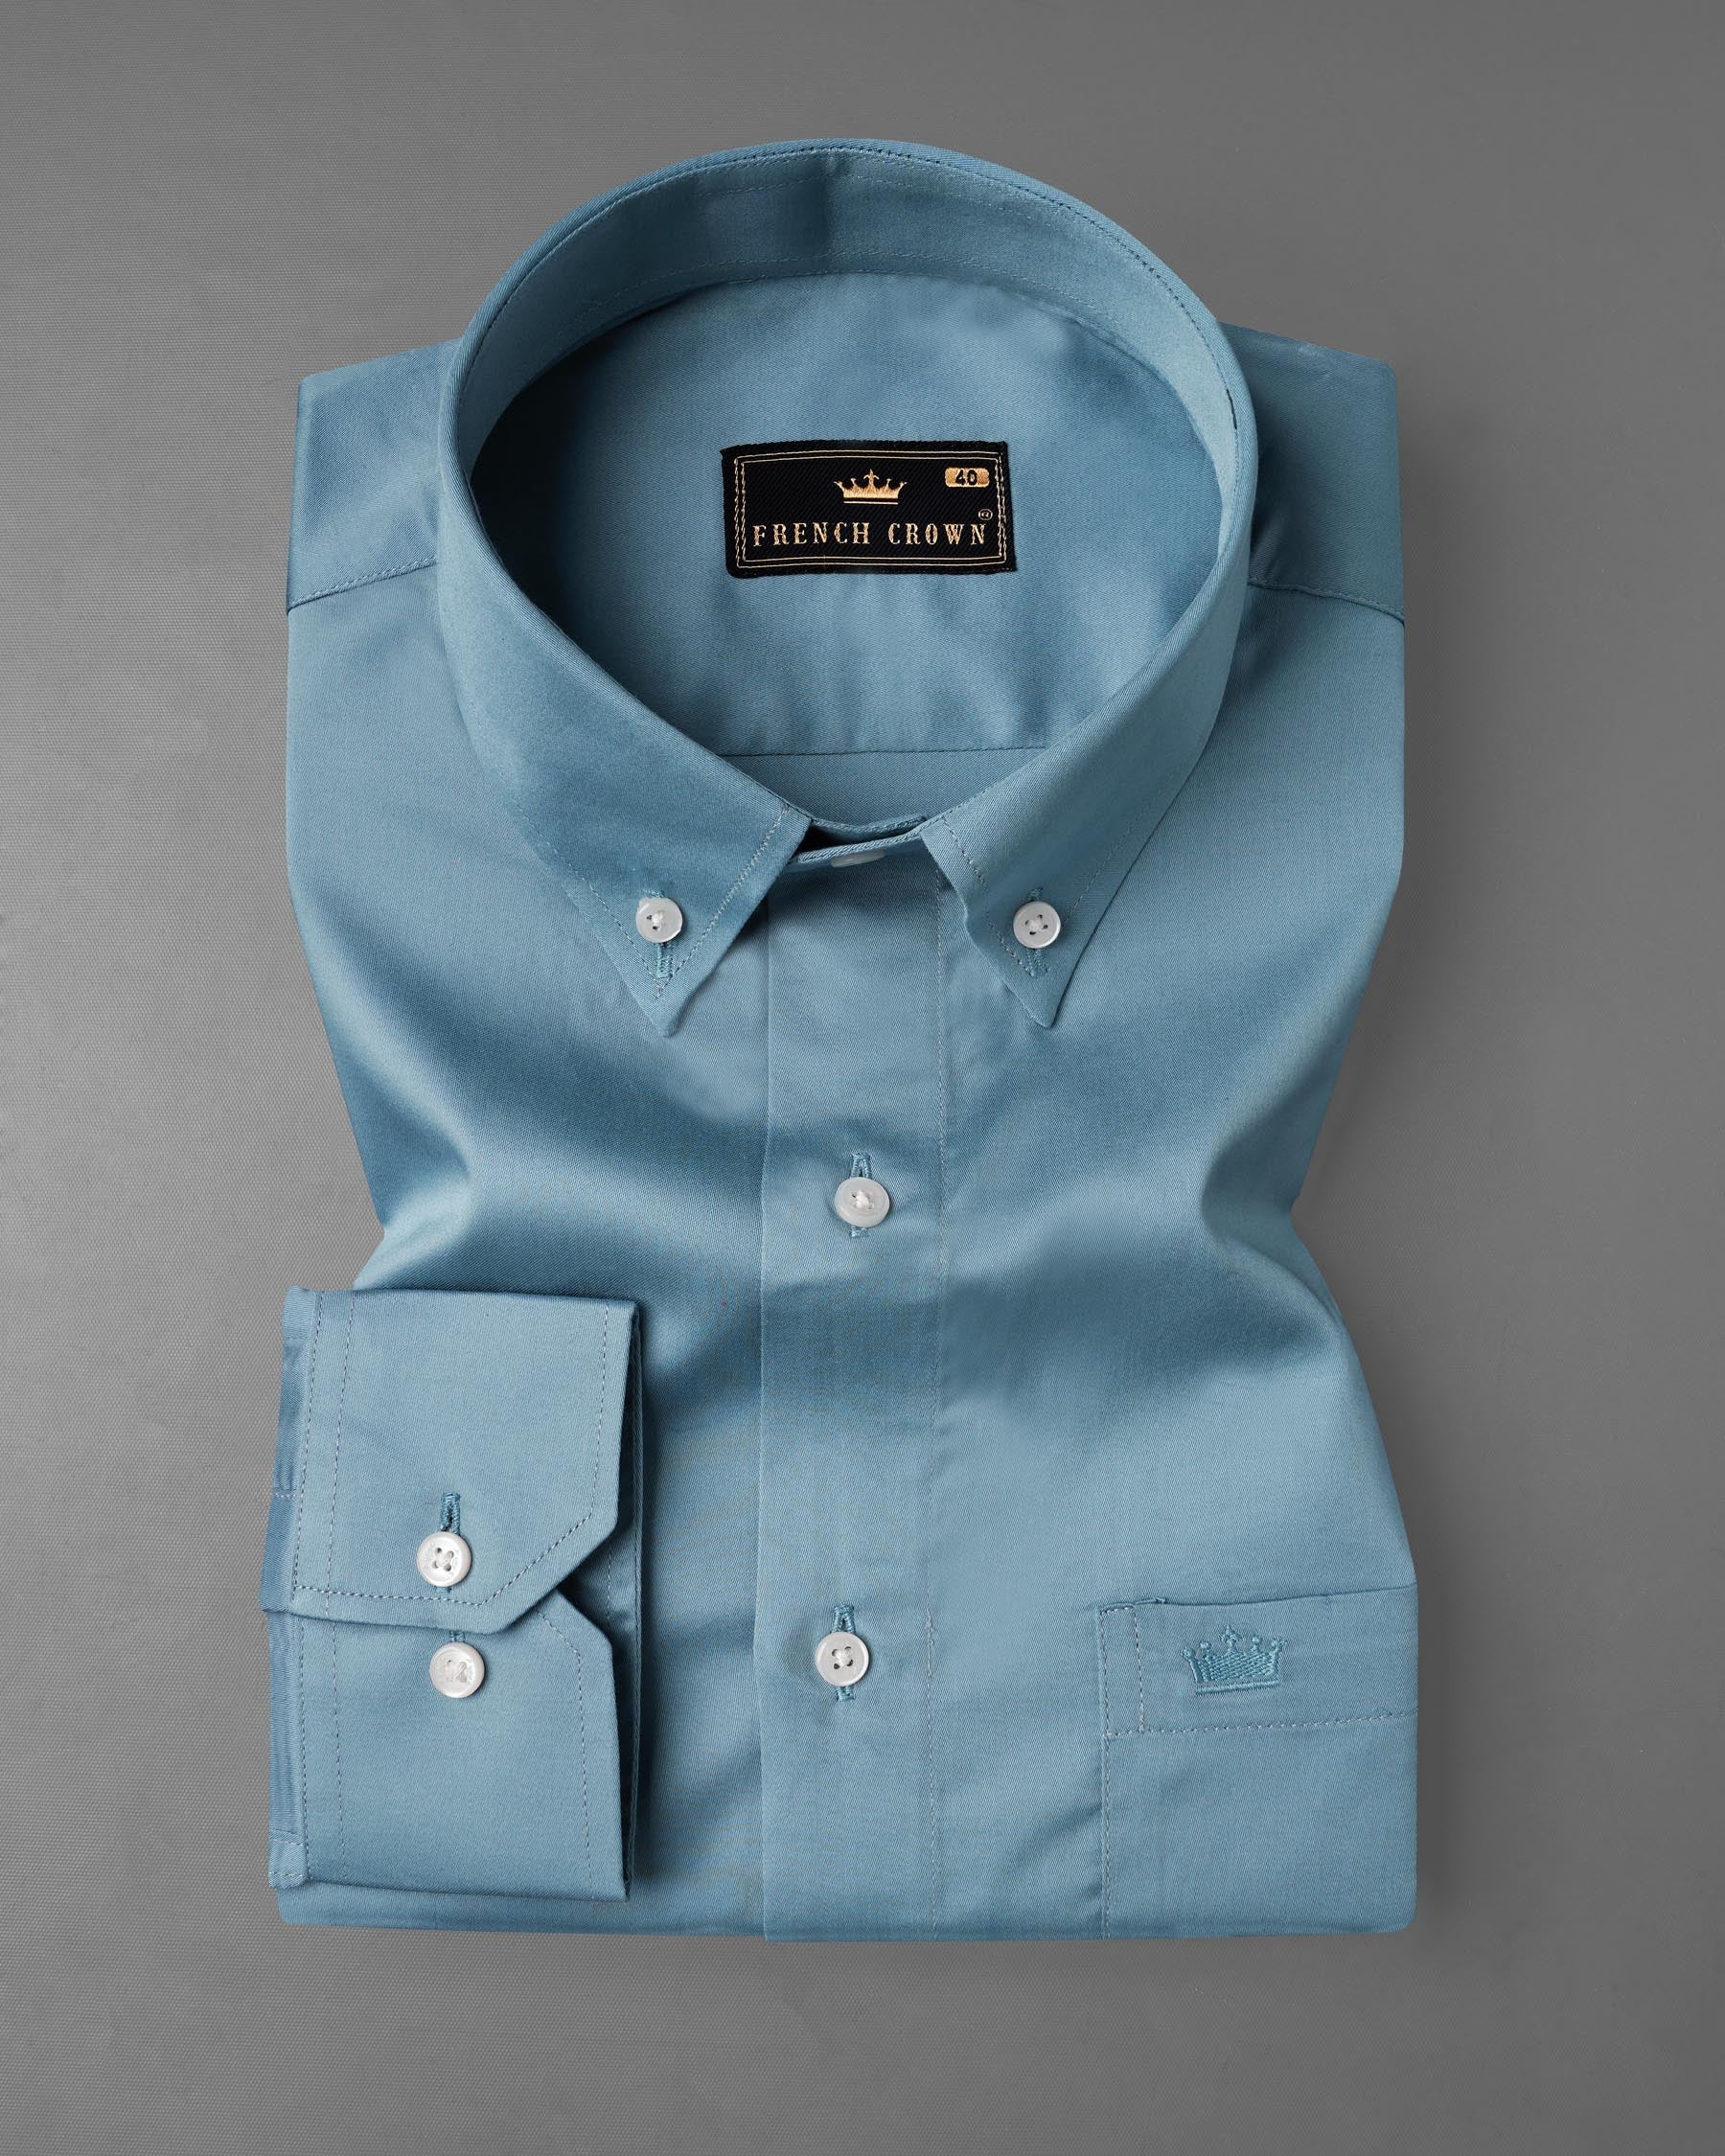 Gothic Blue Super Soft Premium Cotton Shirt